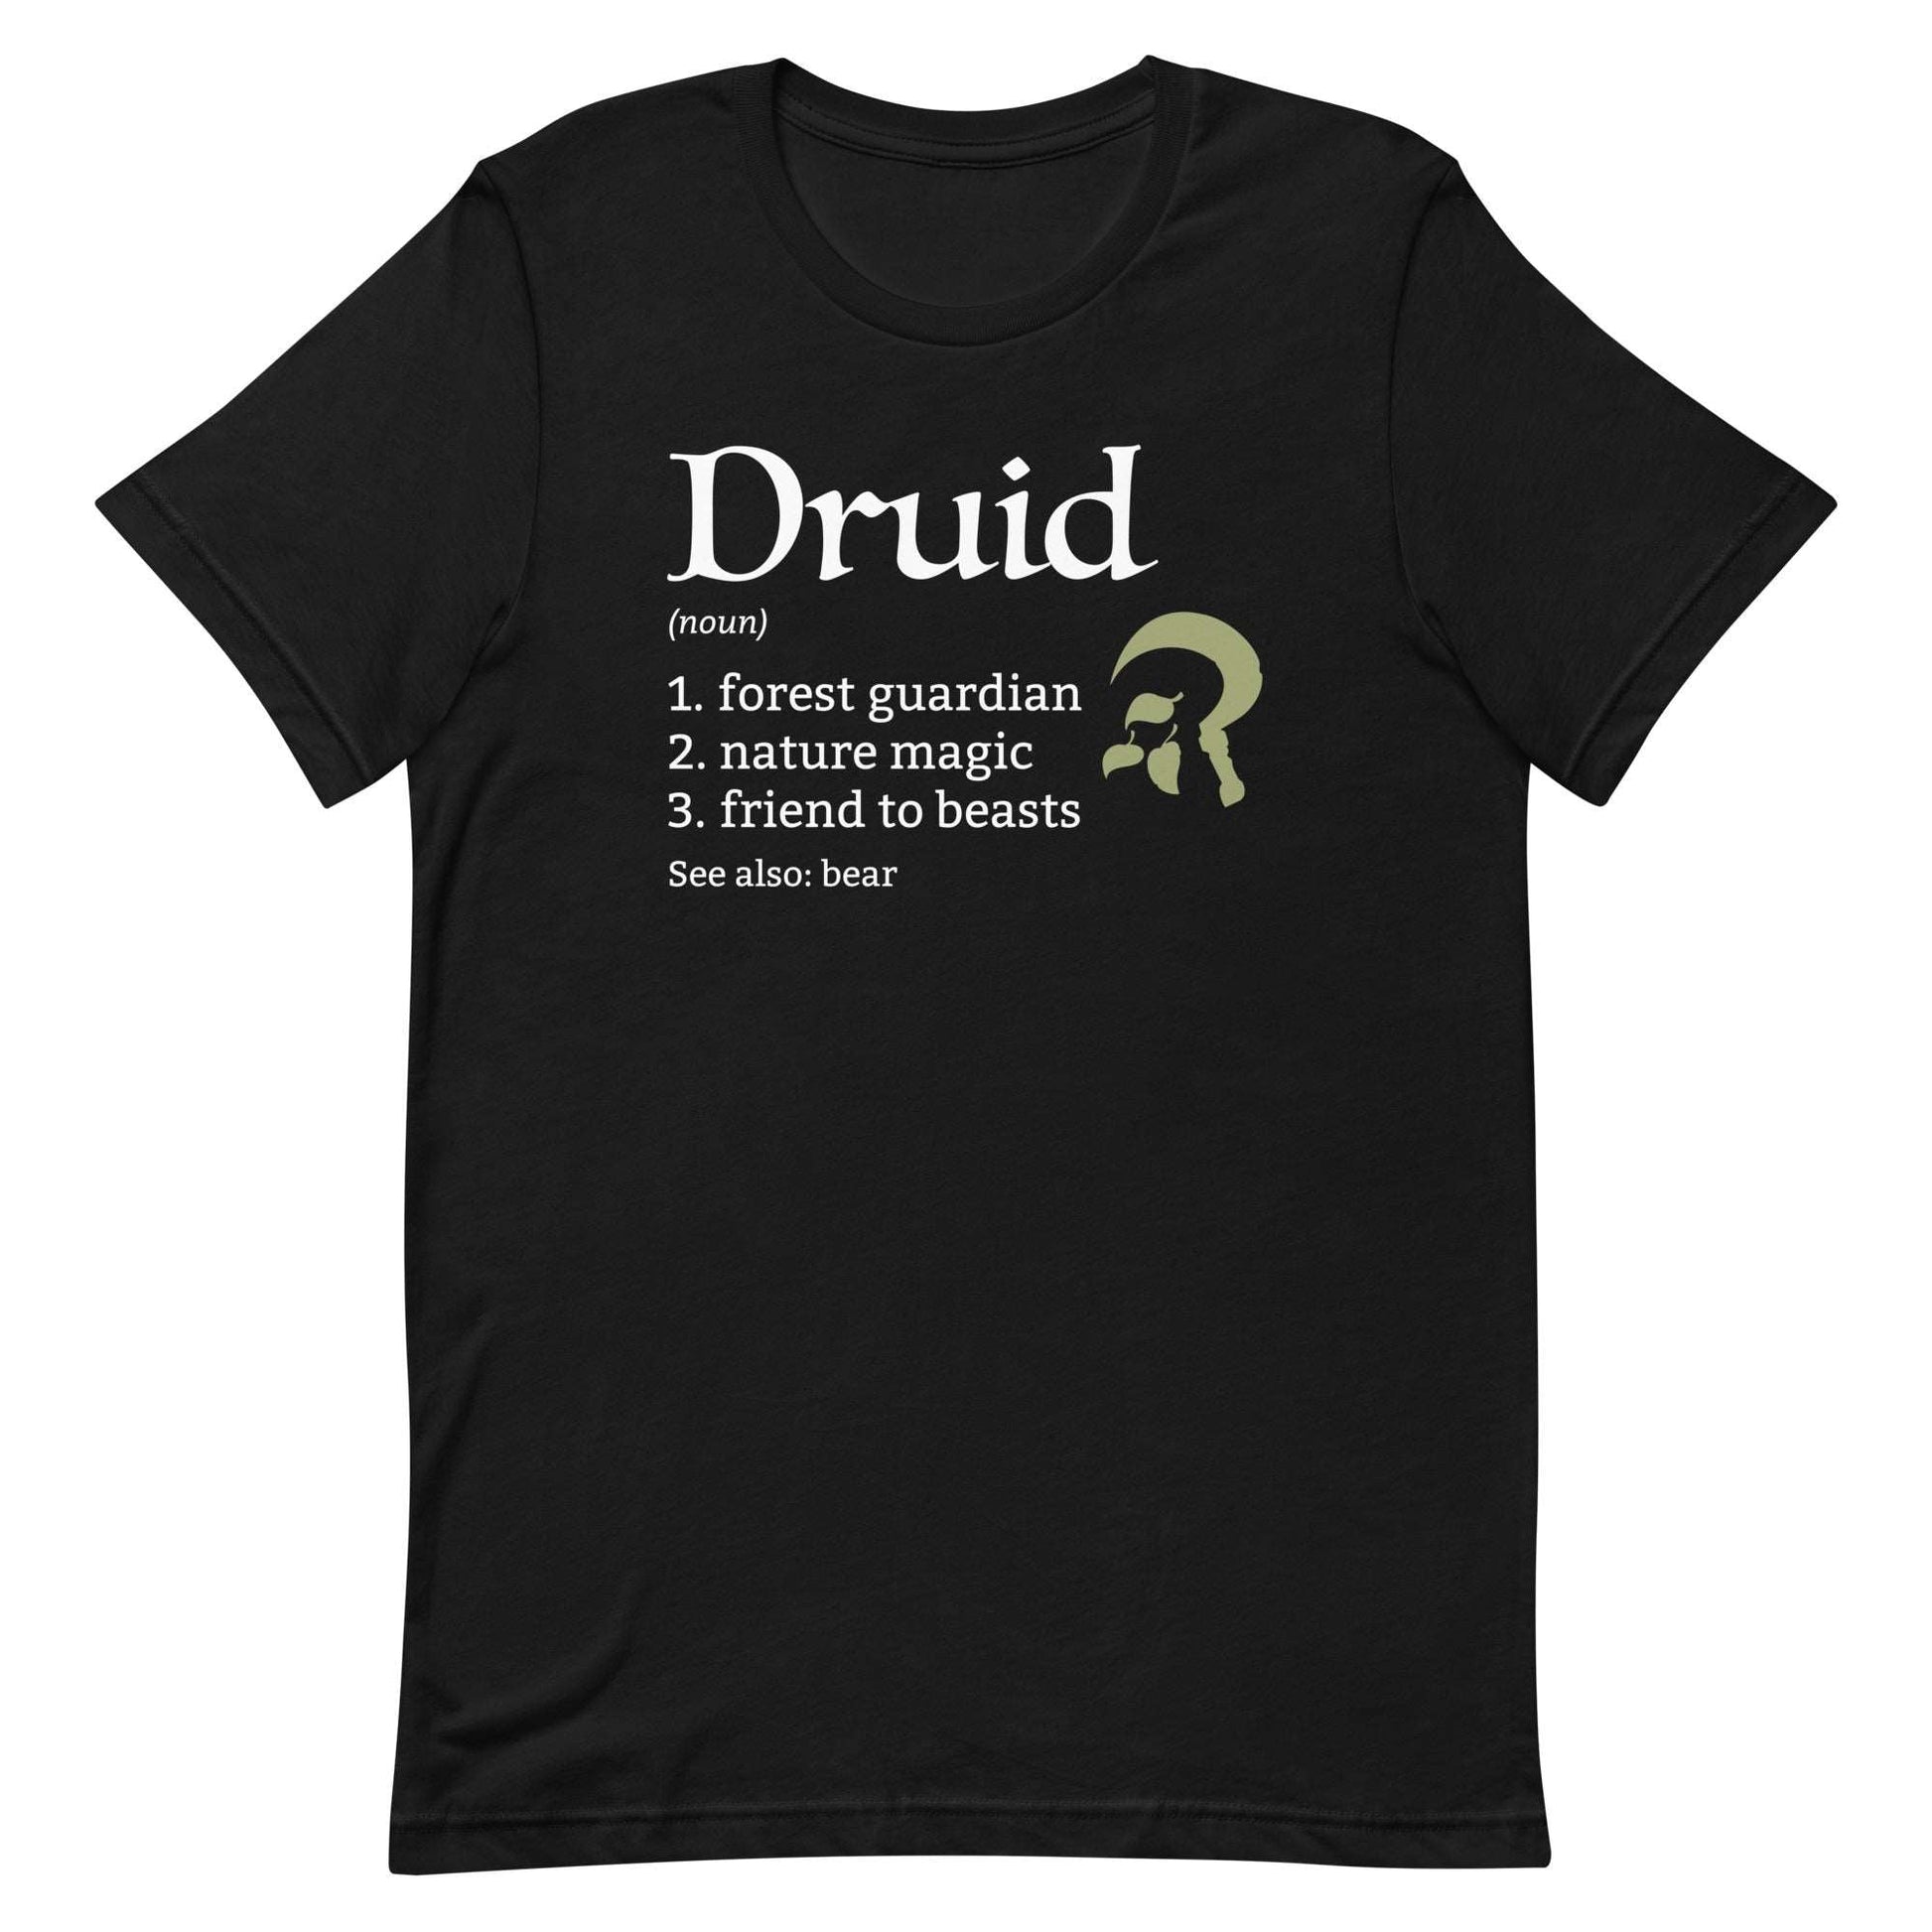 Druid Class Definition T-Shirt – Funny DnD Definition Tee T-Shirt Black / S